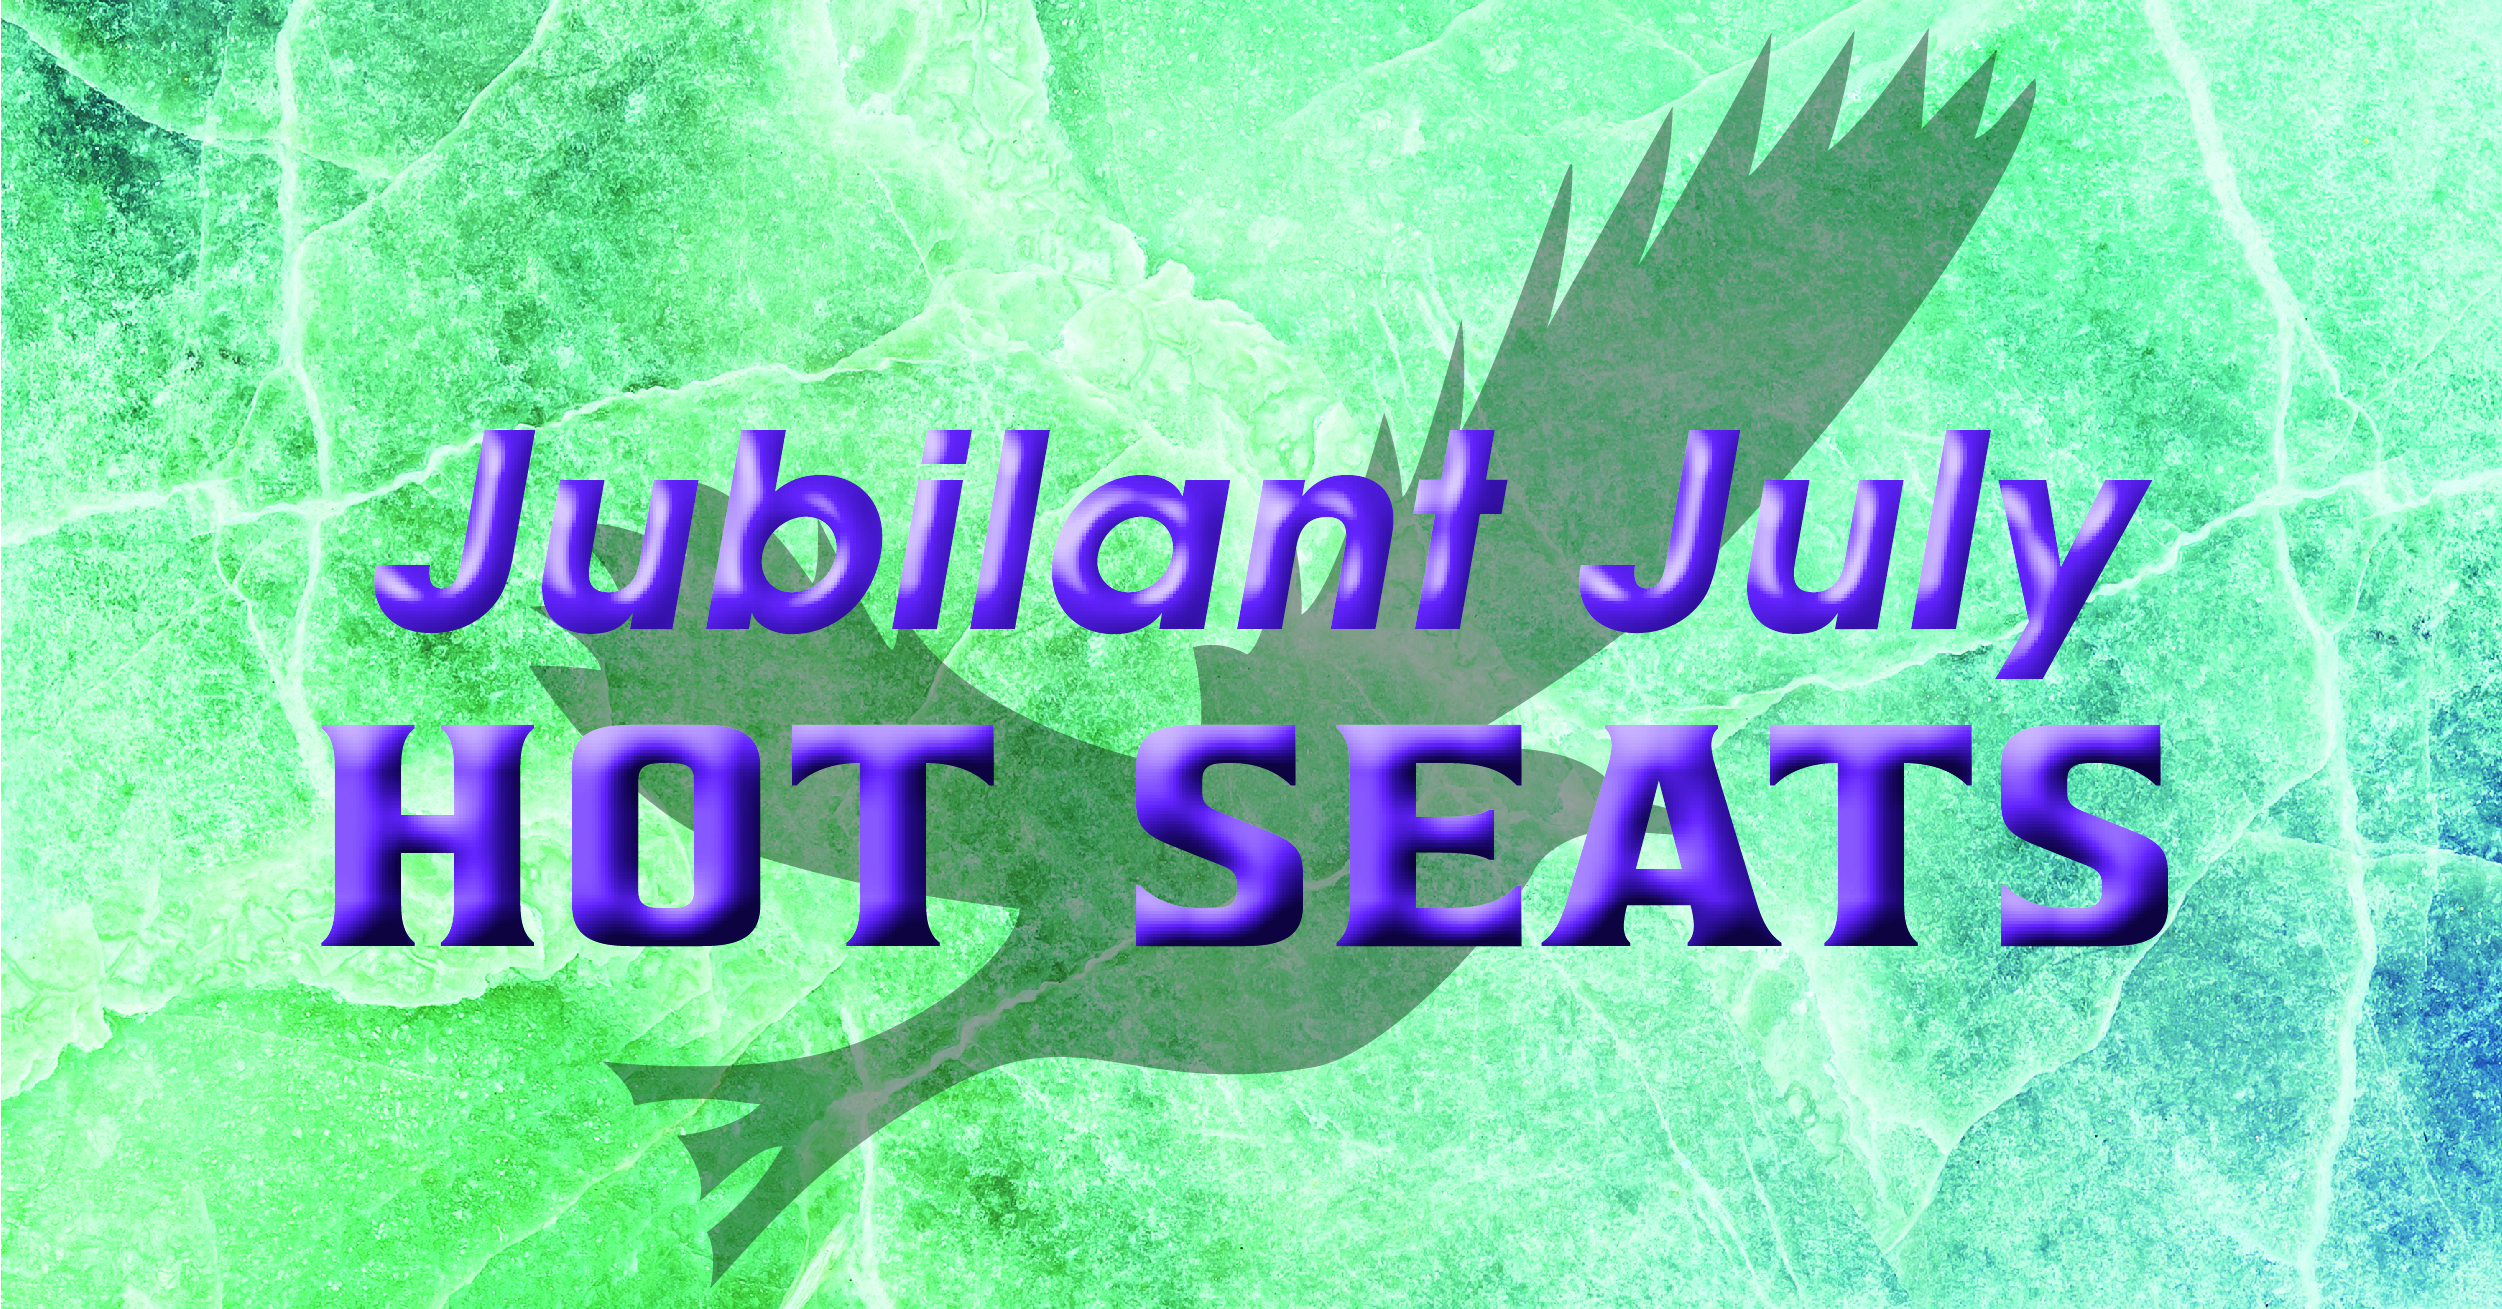 JUBILANT JULY HOT SEATS